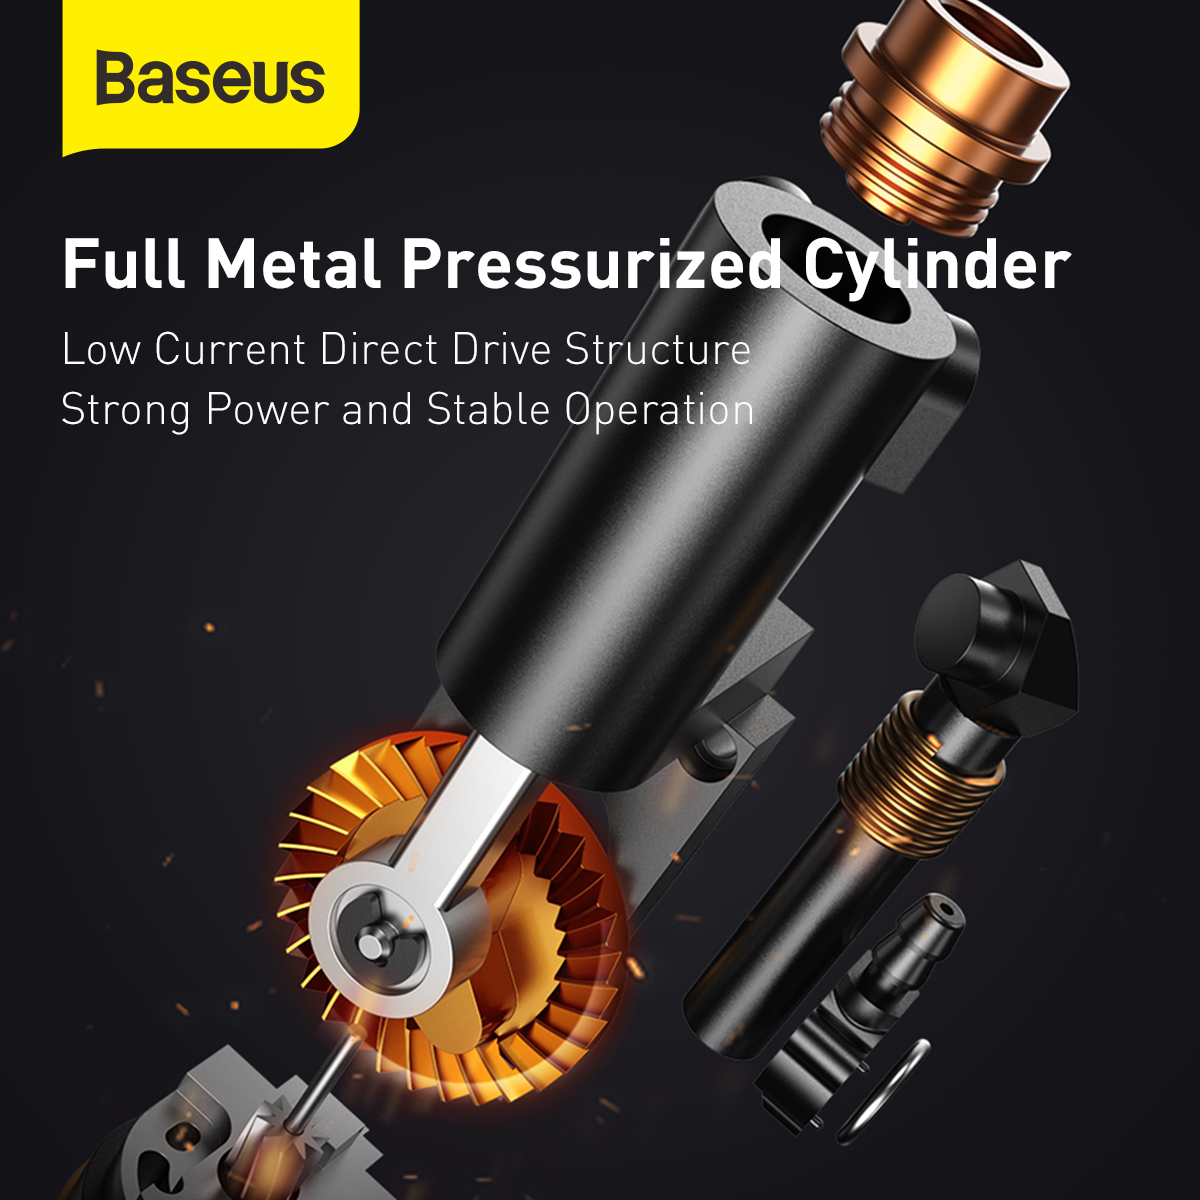 Baseus Energy Source Trådlös minikompressor/luftpump, 2400mAh